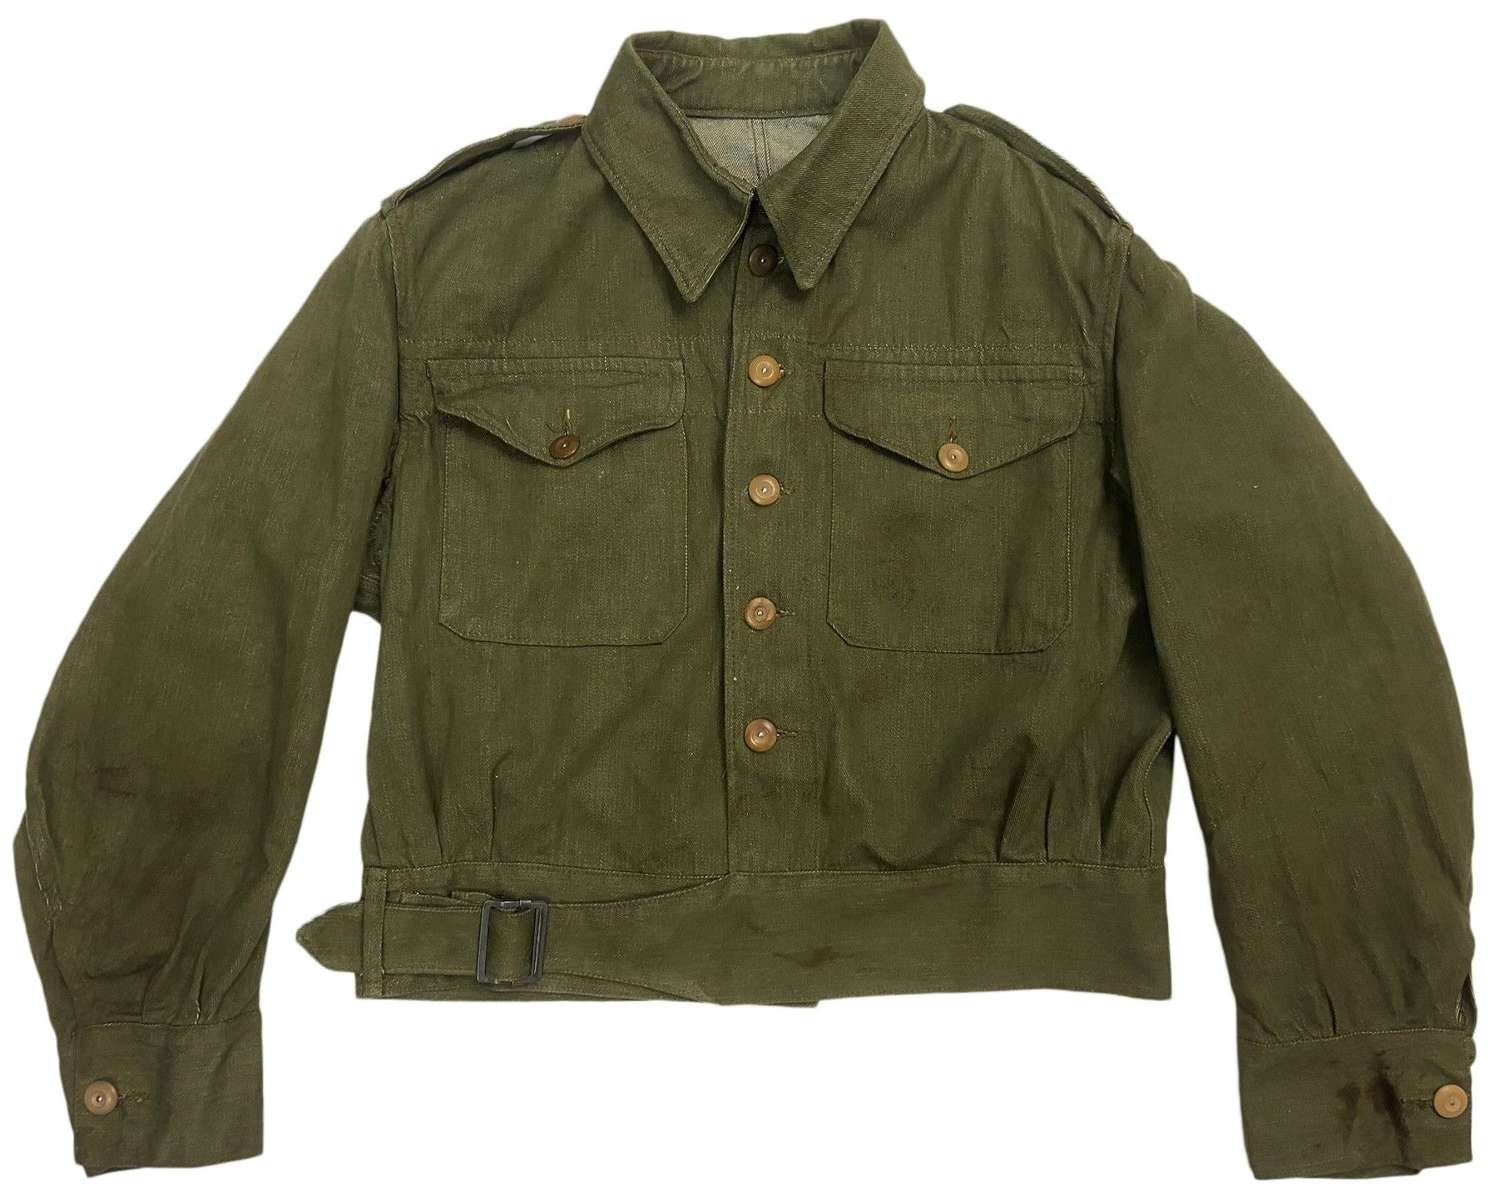 Original 1955 Dated British Army Denim Battledress Blouse - Size 4